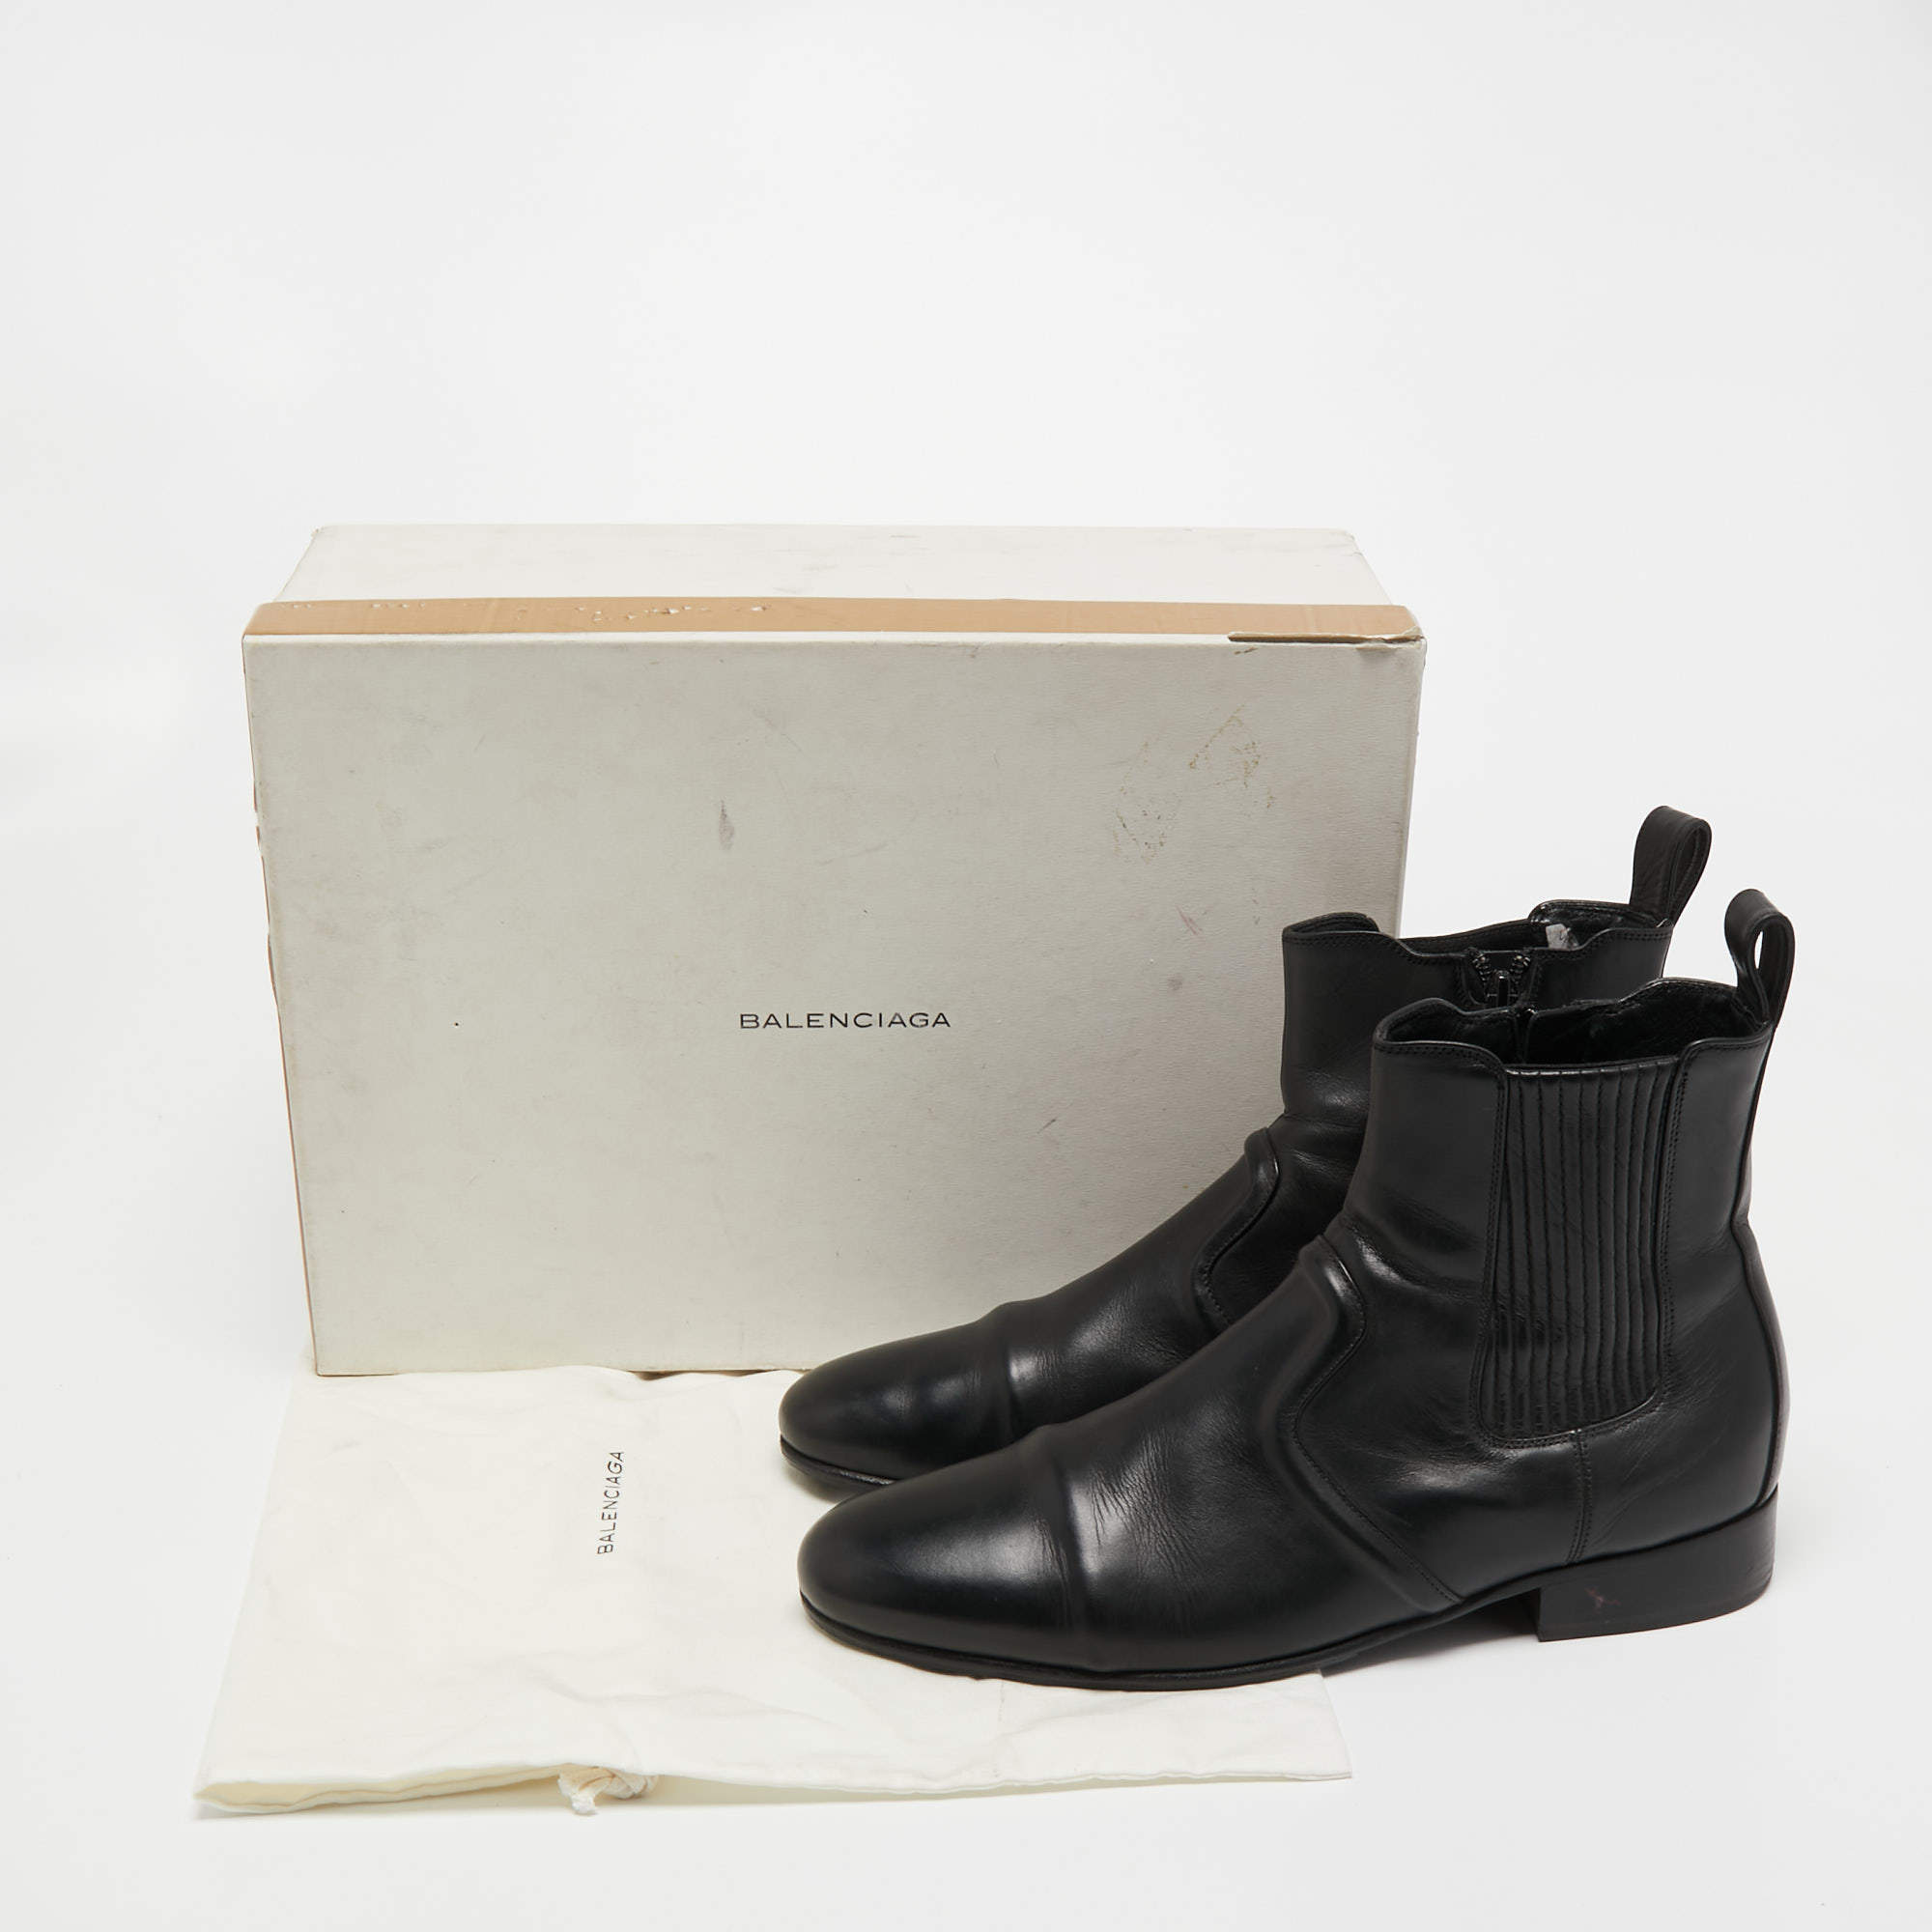 Leather boots Balenciaga Black size 42 EU in Leather - 37160861